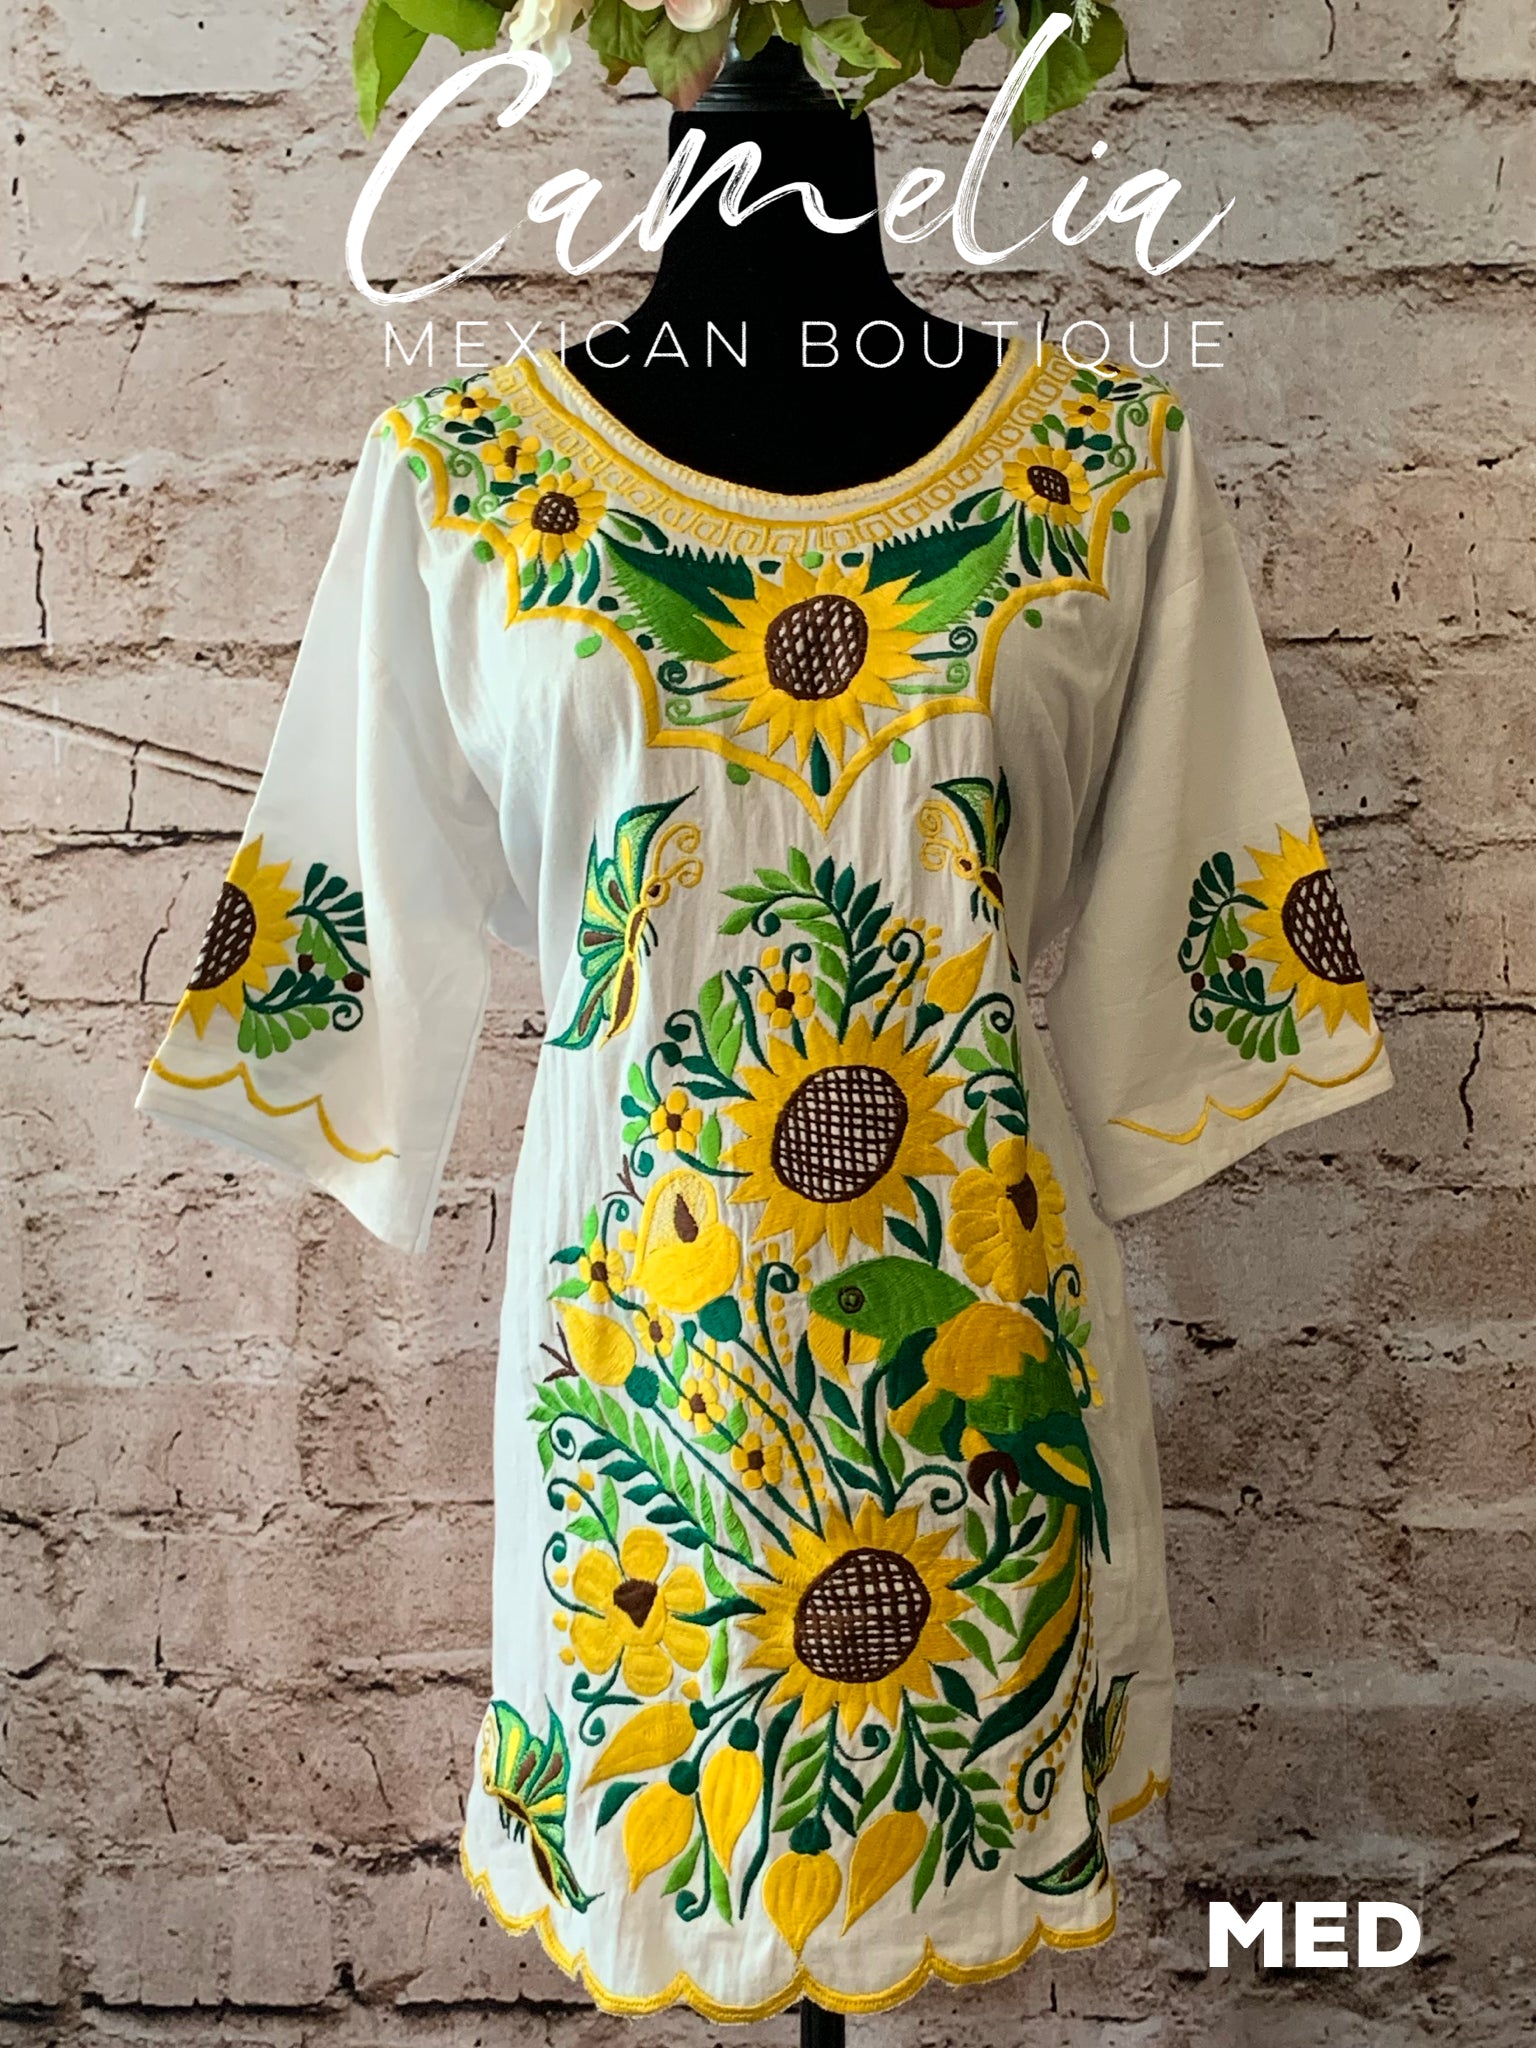 Mexican Mini Dress Sunflower – Camelia Mexican Boutique